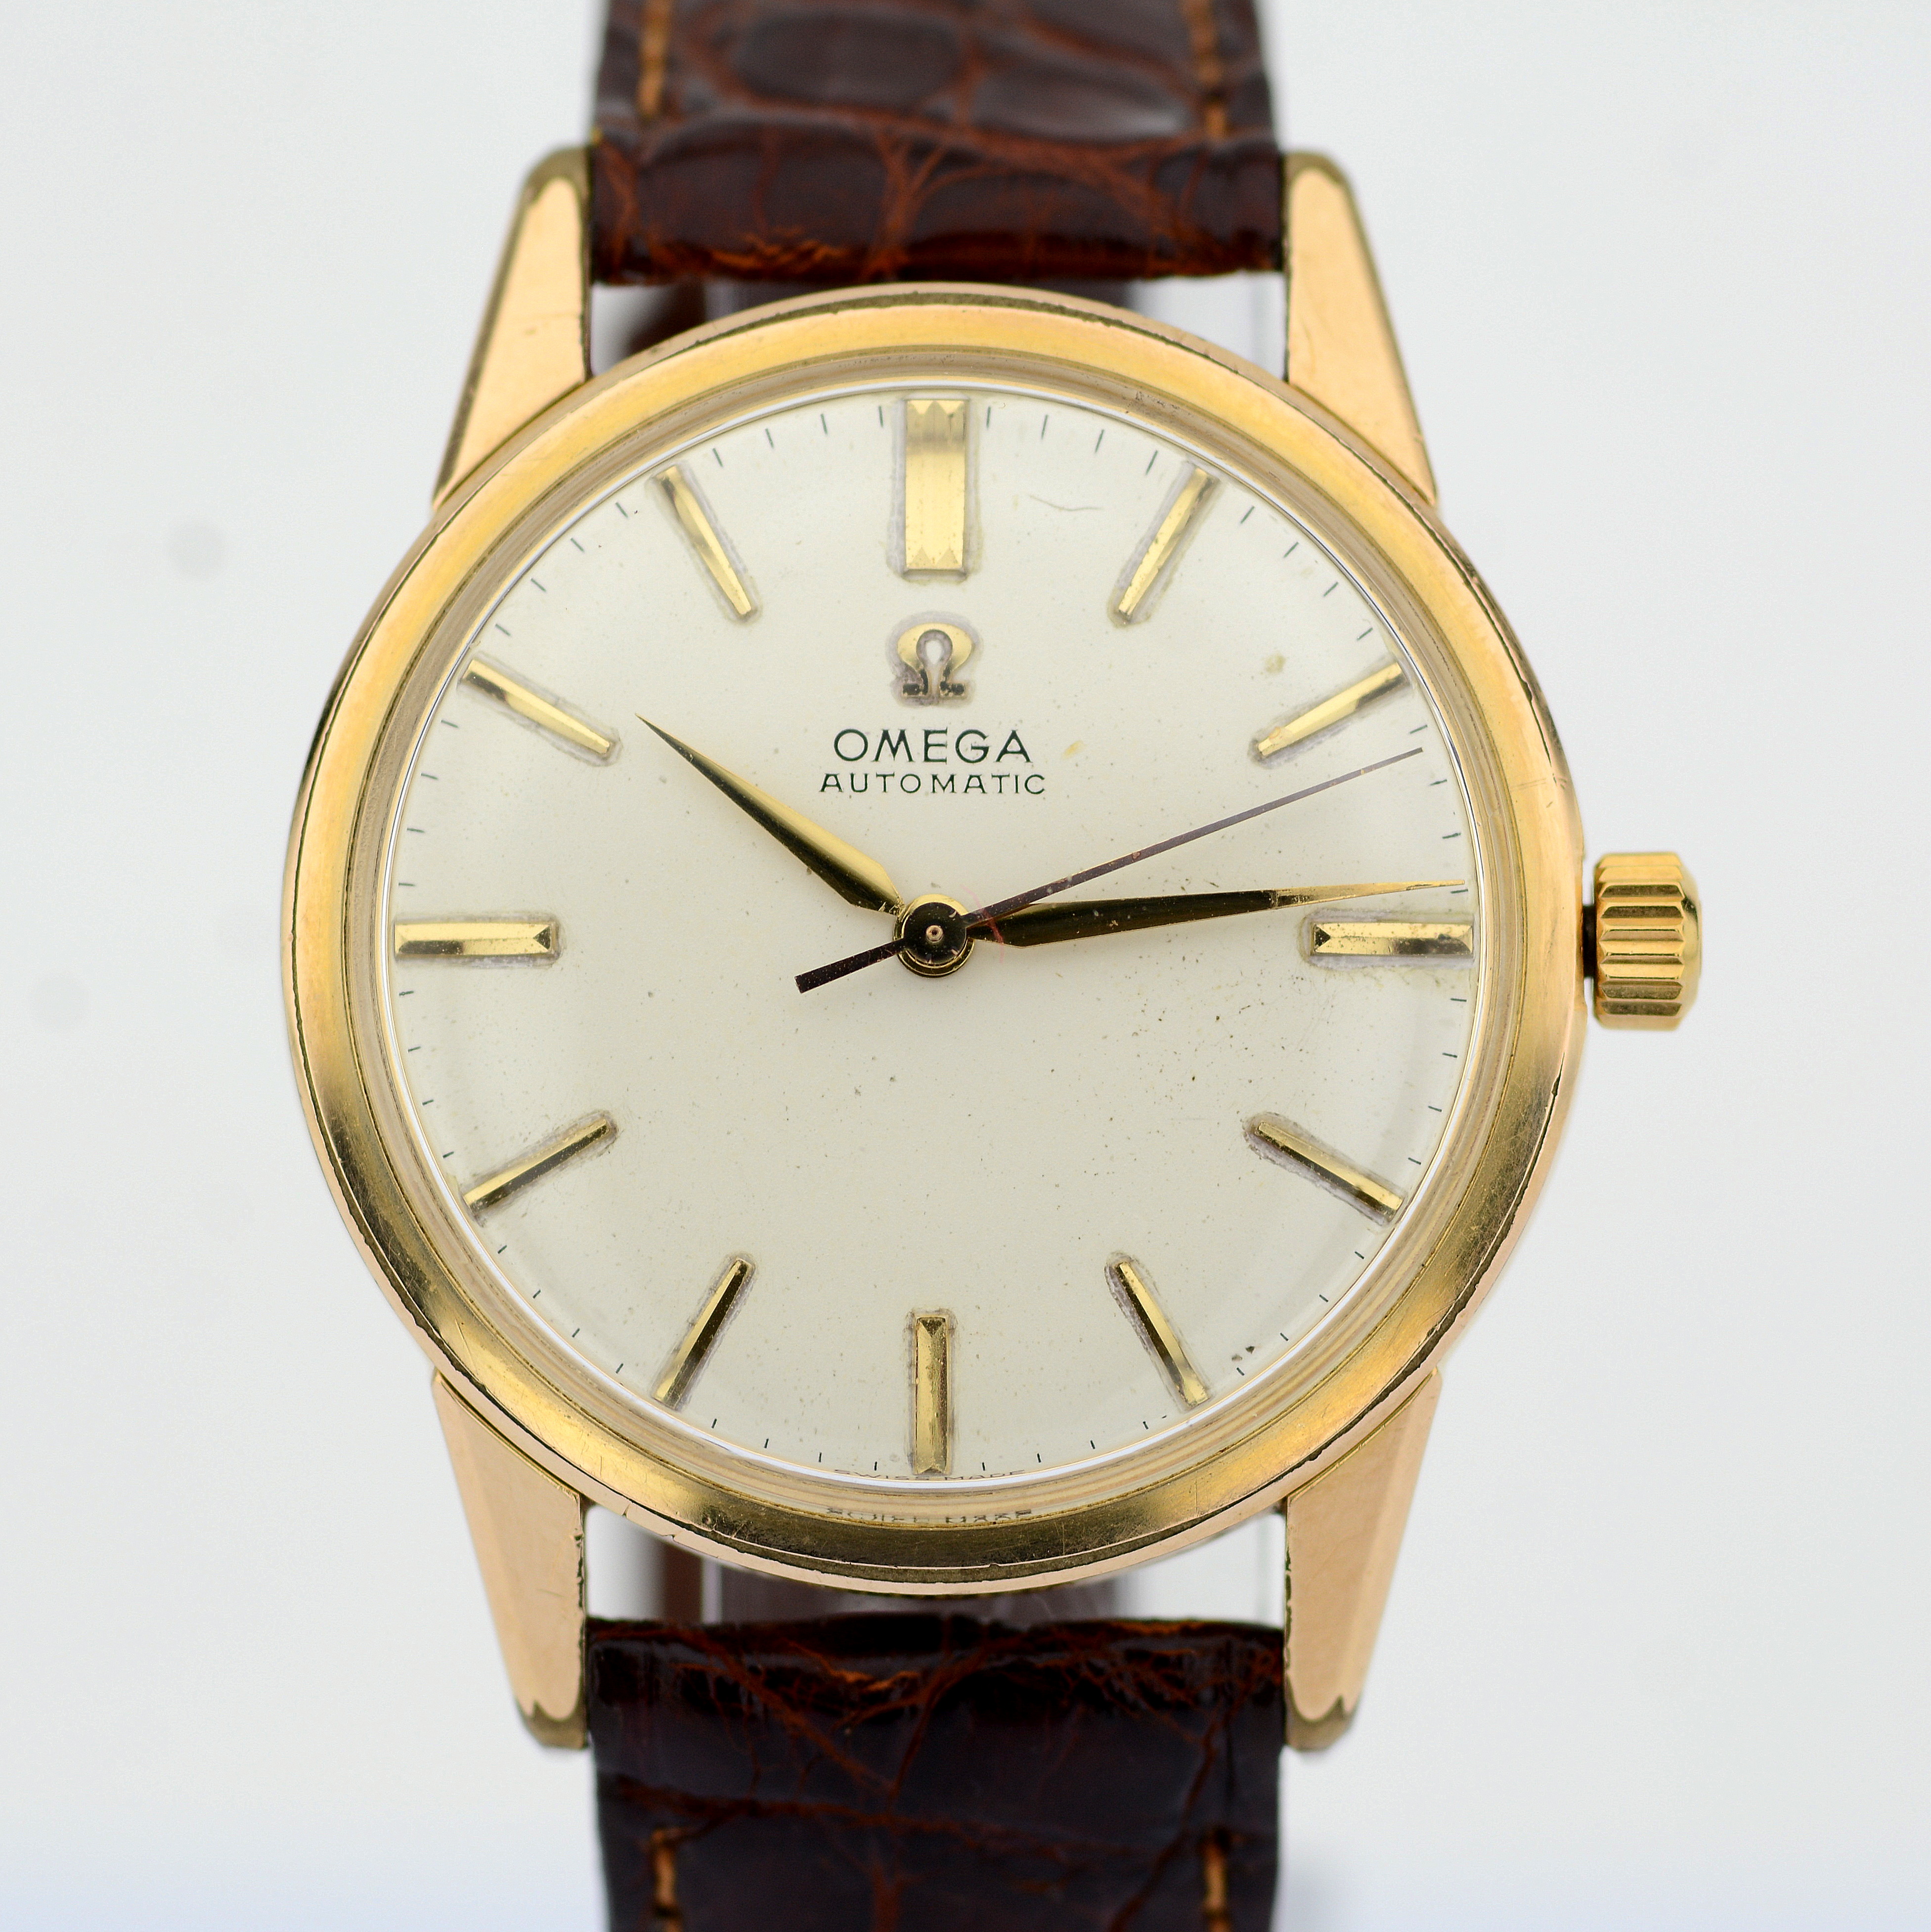 Omega / Vintage Automatic - Gentlmen's Gold/Steel Wrist Watch - Image 4 of 8